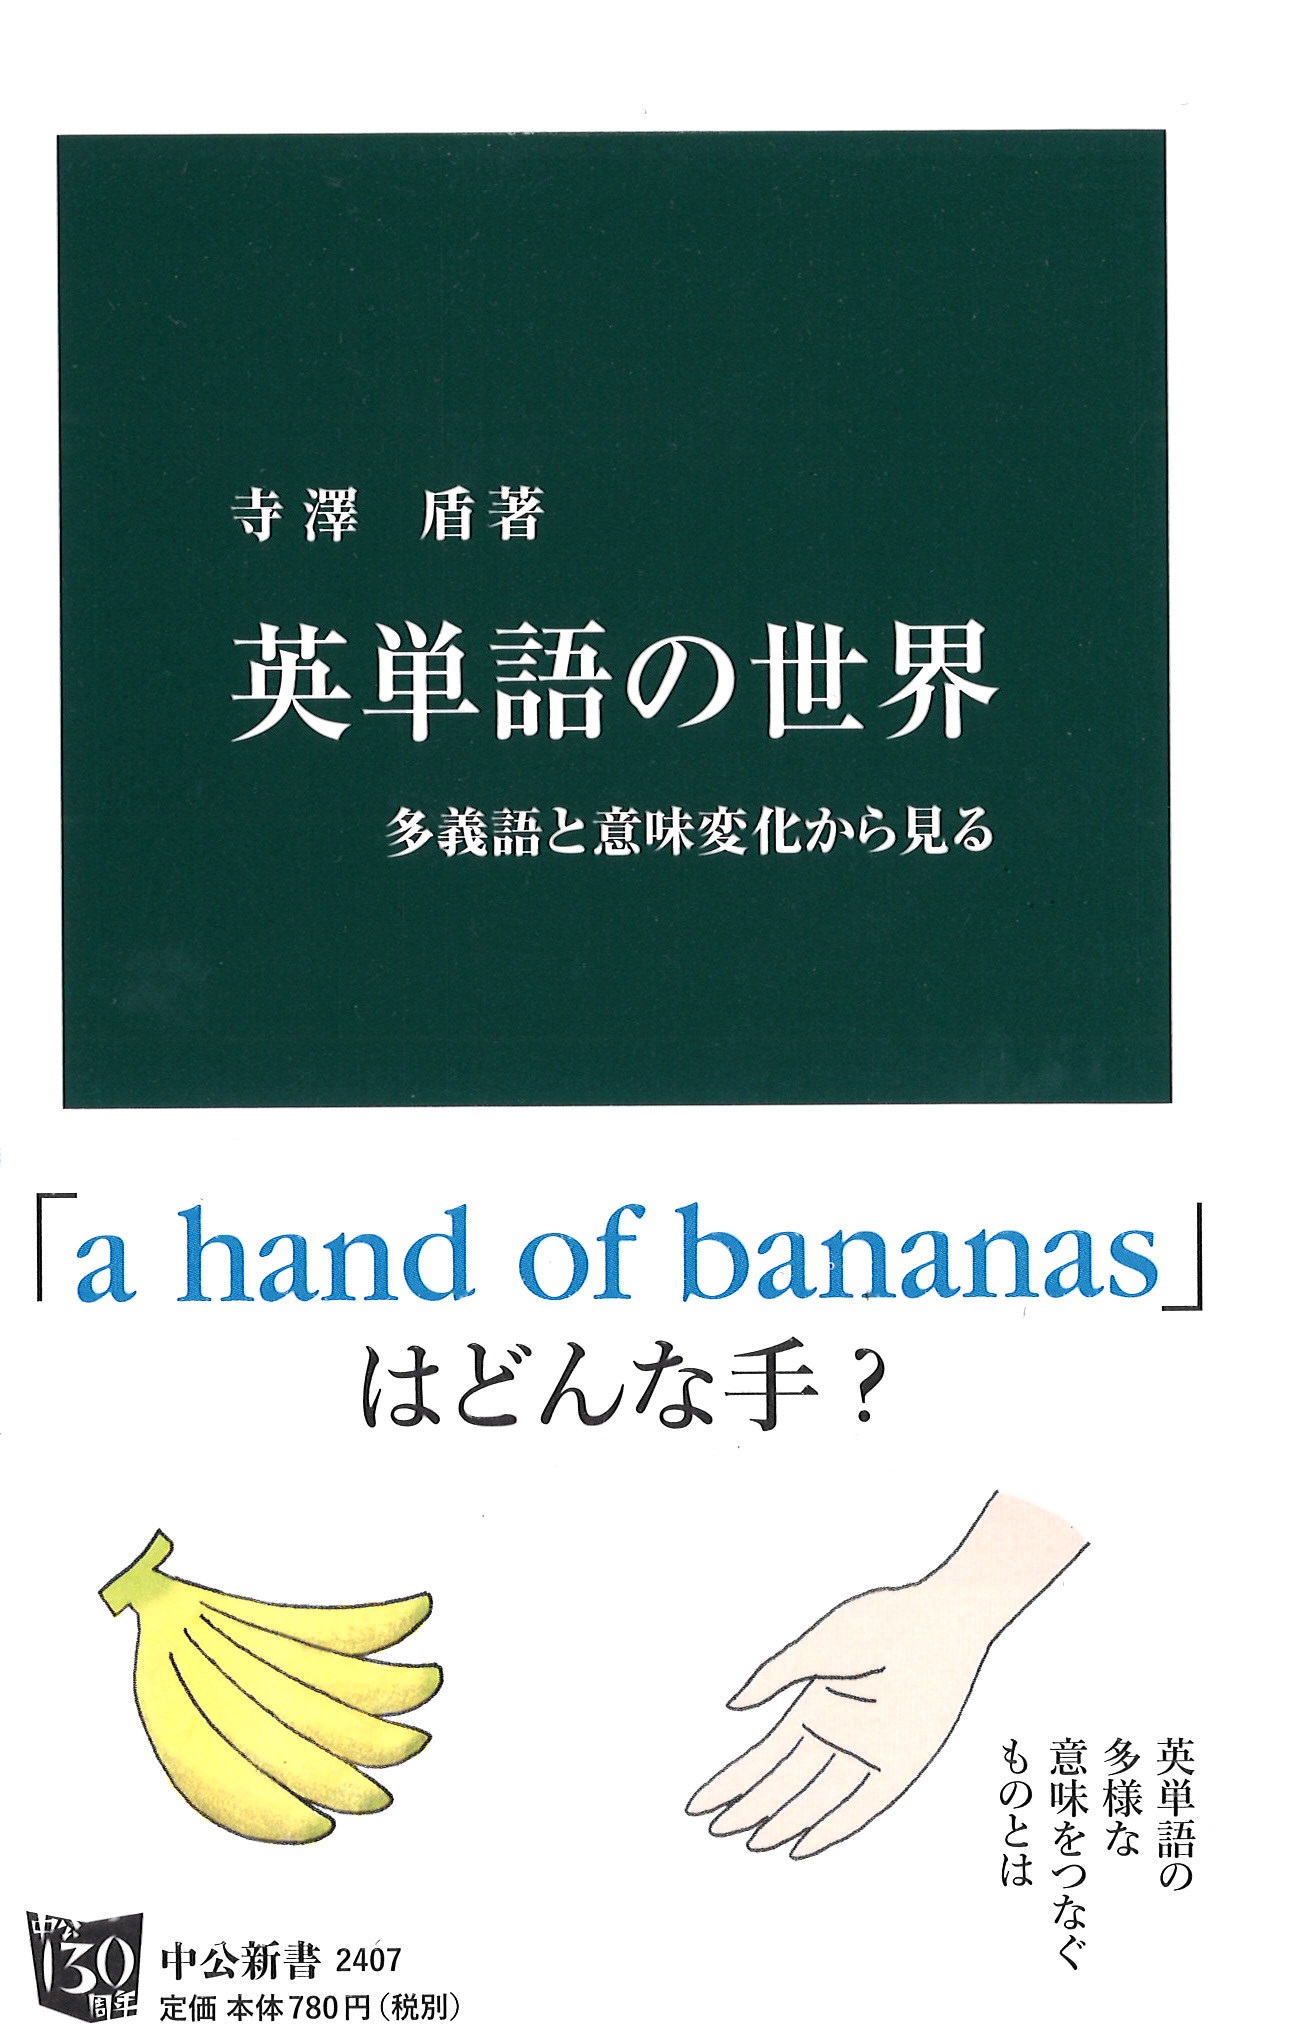 a hand of bananasはどんな手？とイラストが掲載された白と深緑の表紙